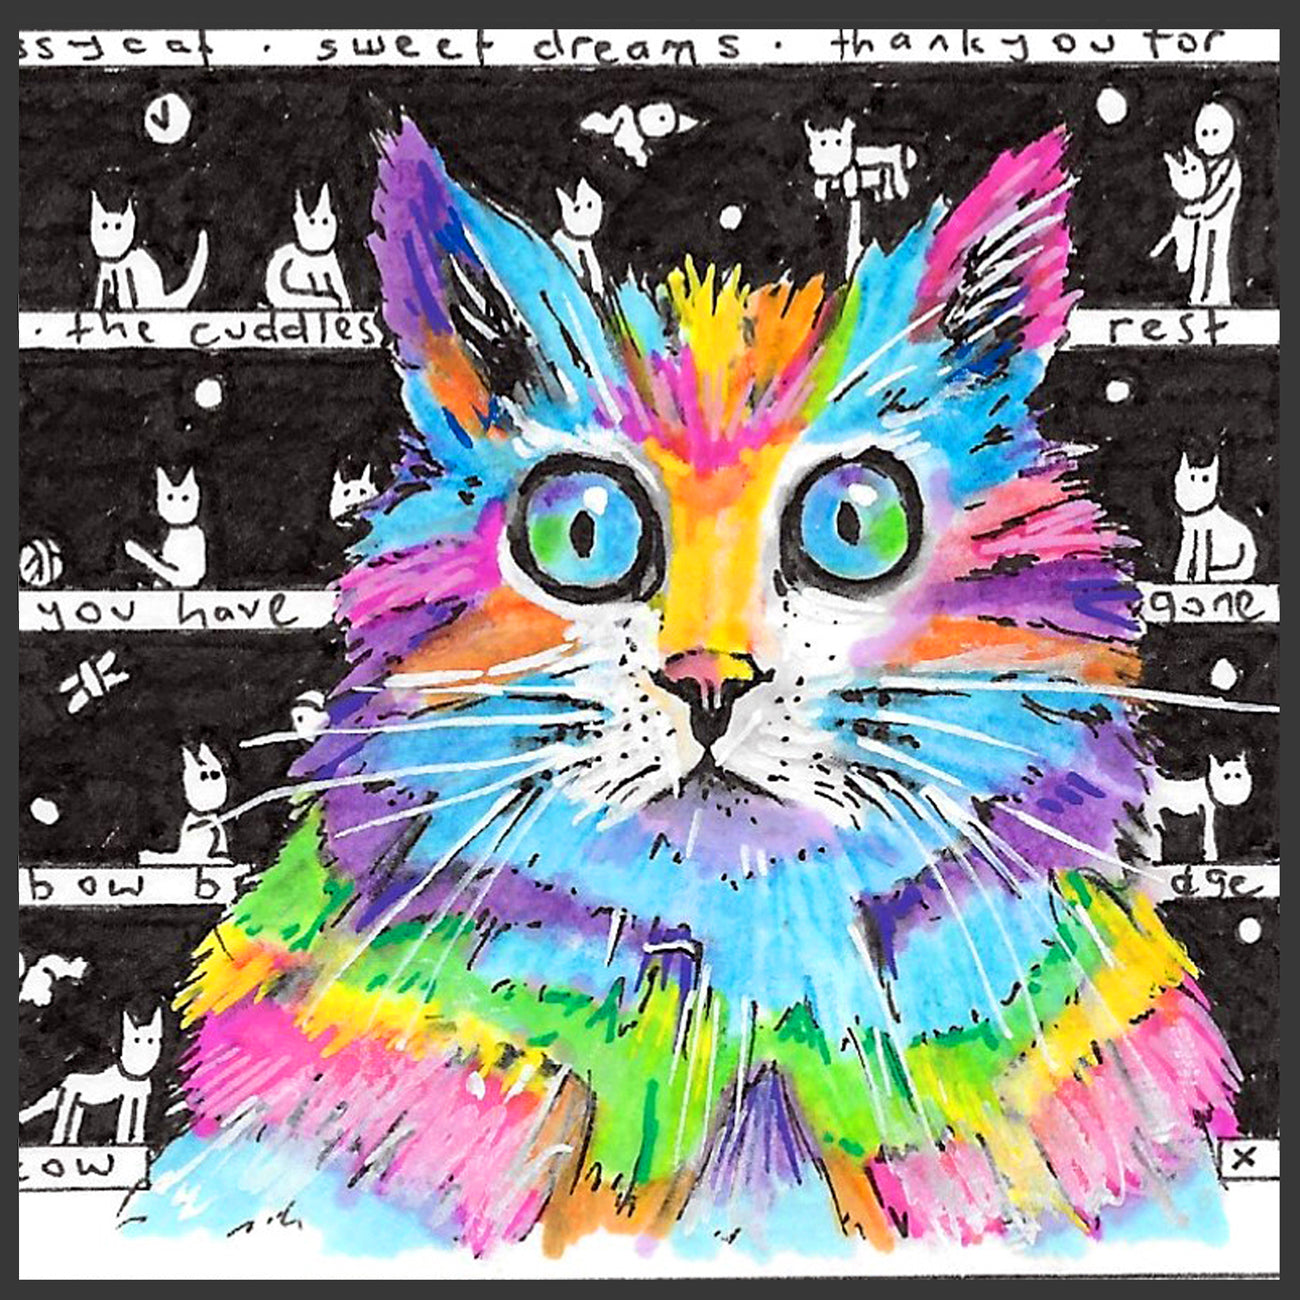 Rainbow Pussycat Cushion